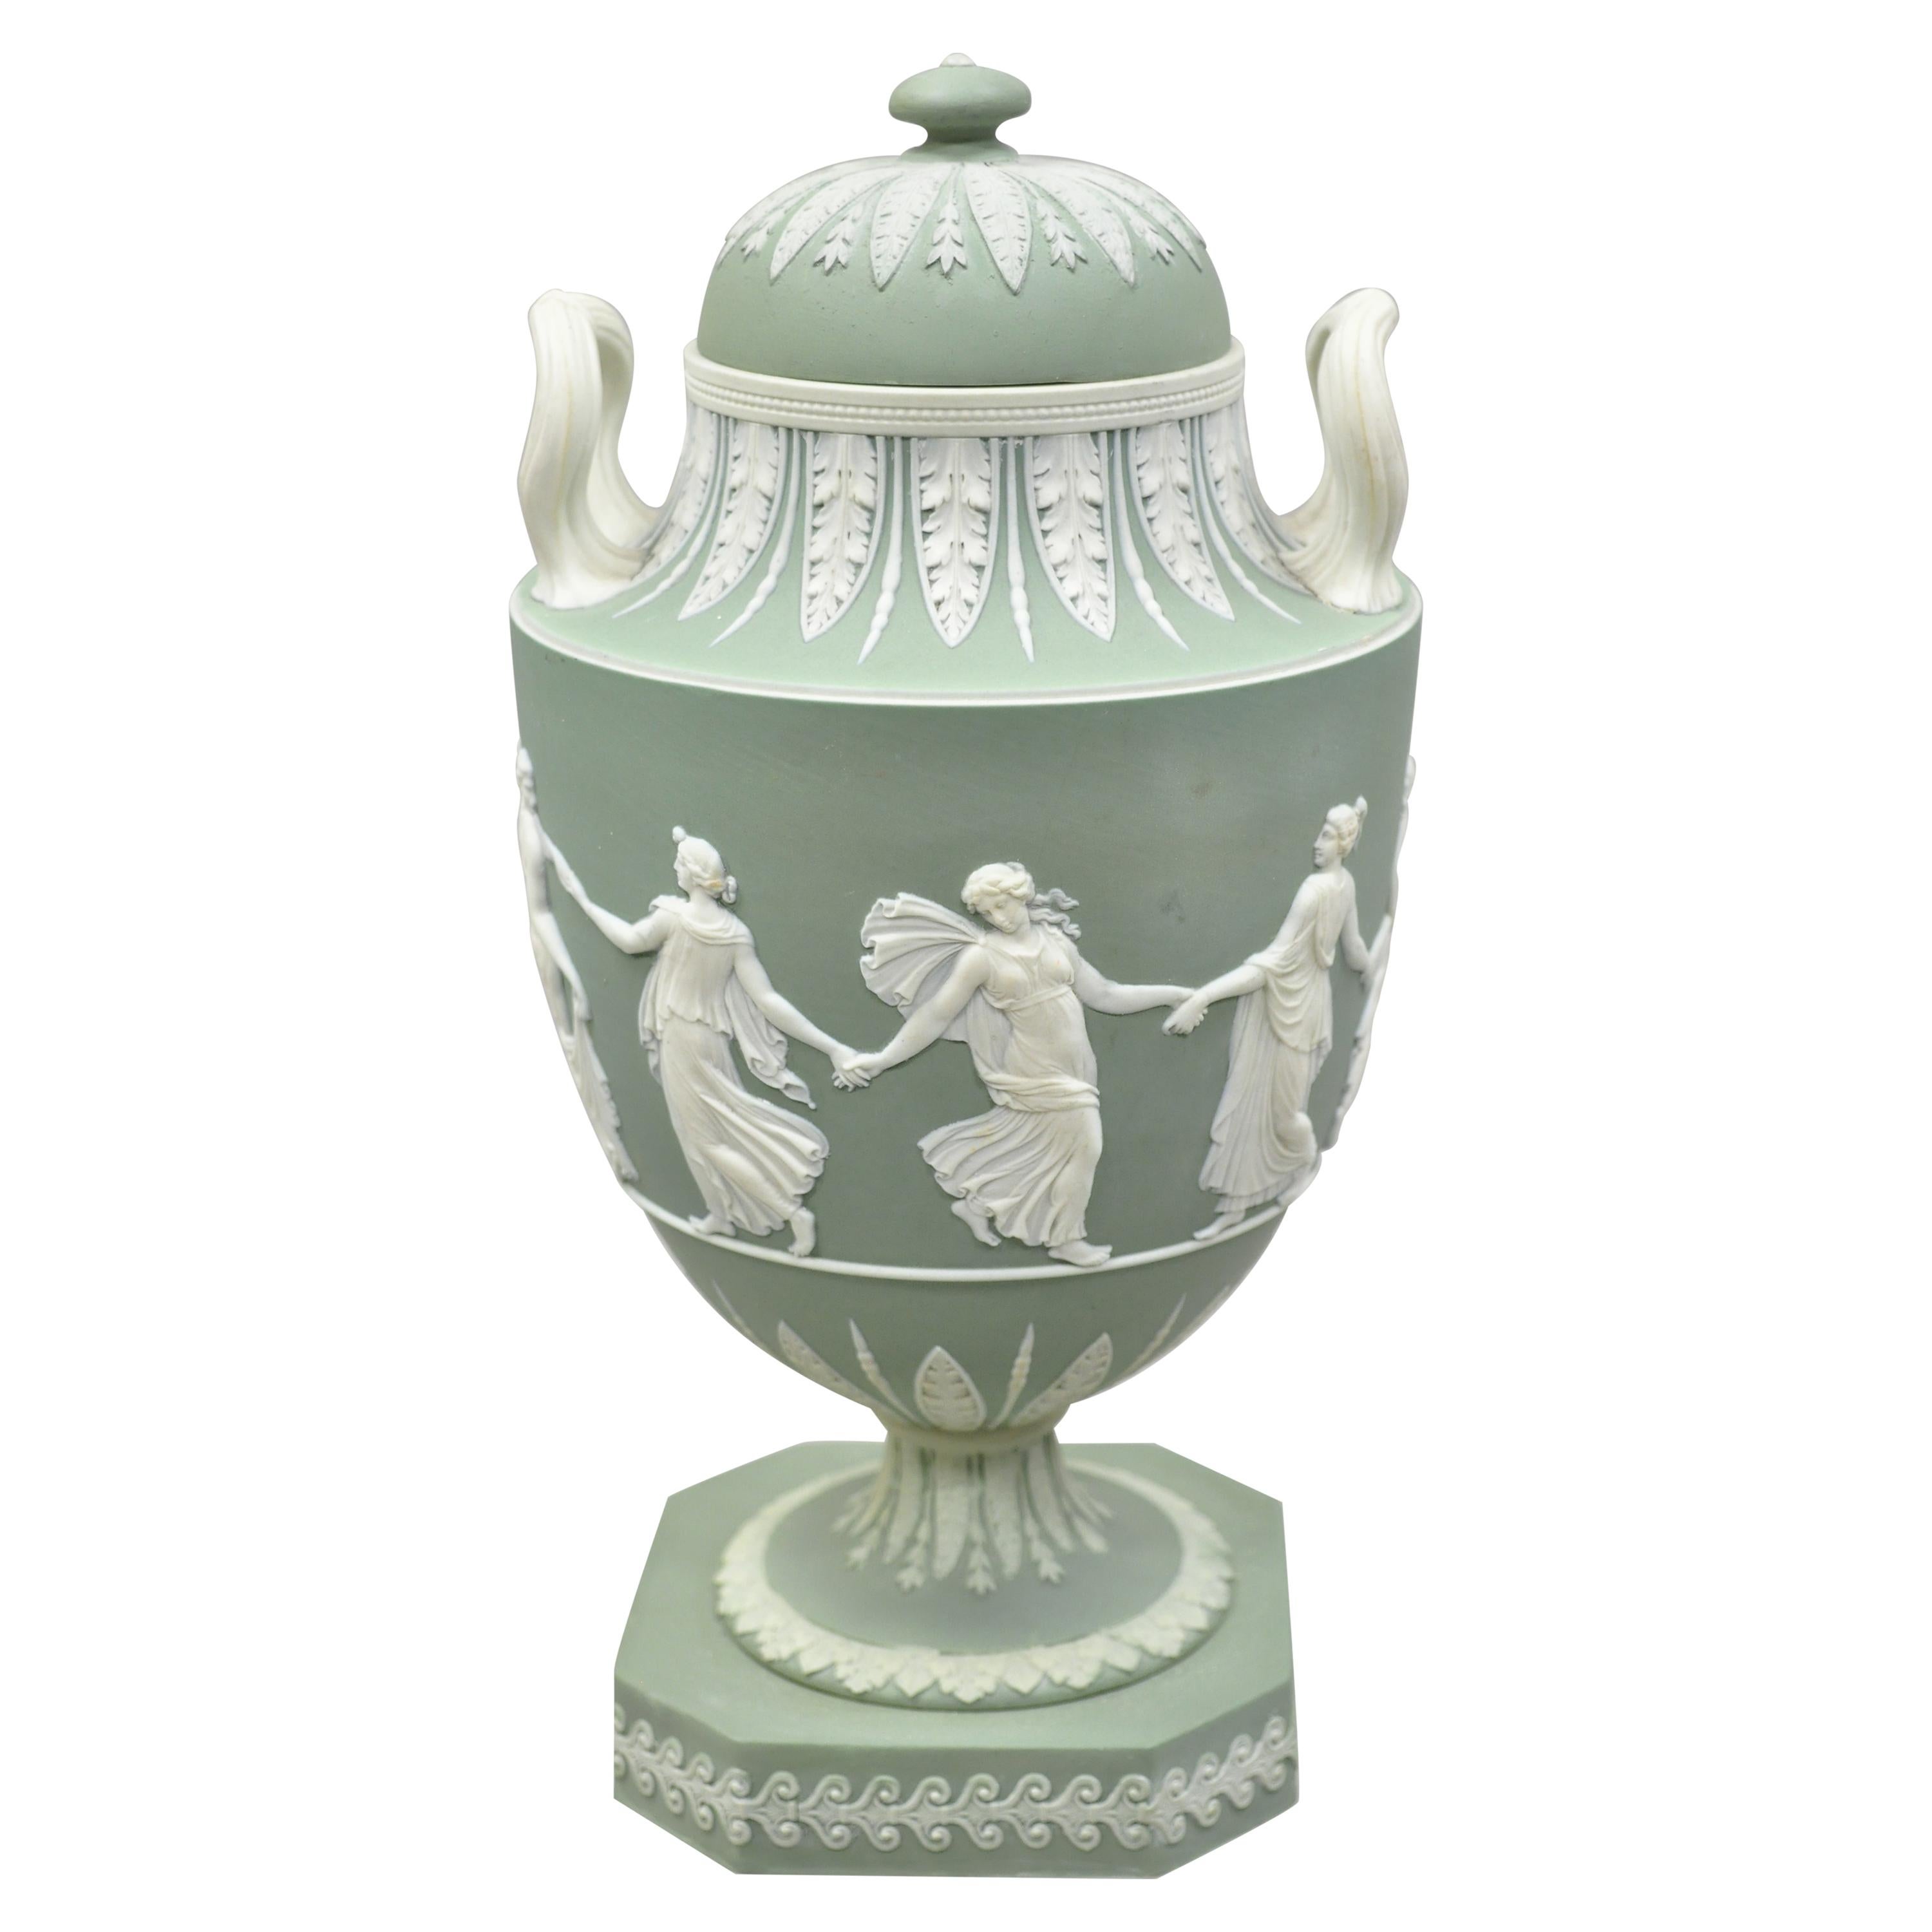 Wedgwood Sage Green Lidded Double Handle Urn Vase with Dancing Figures